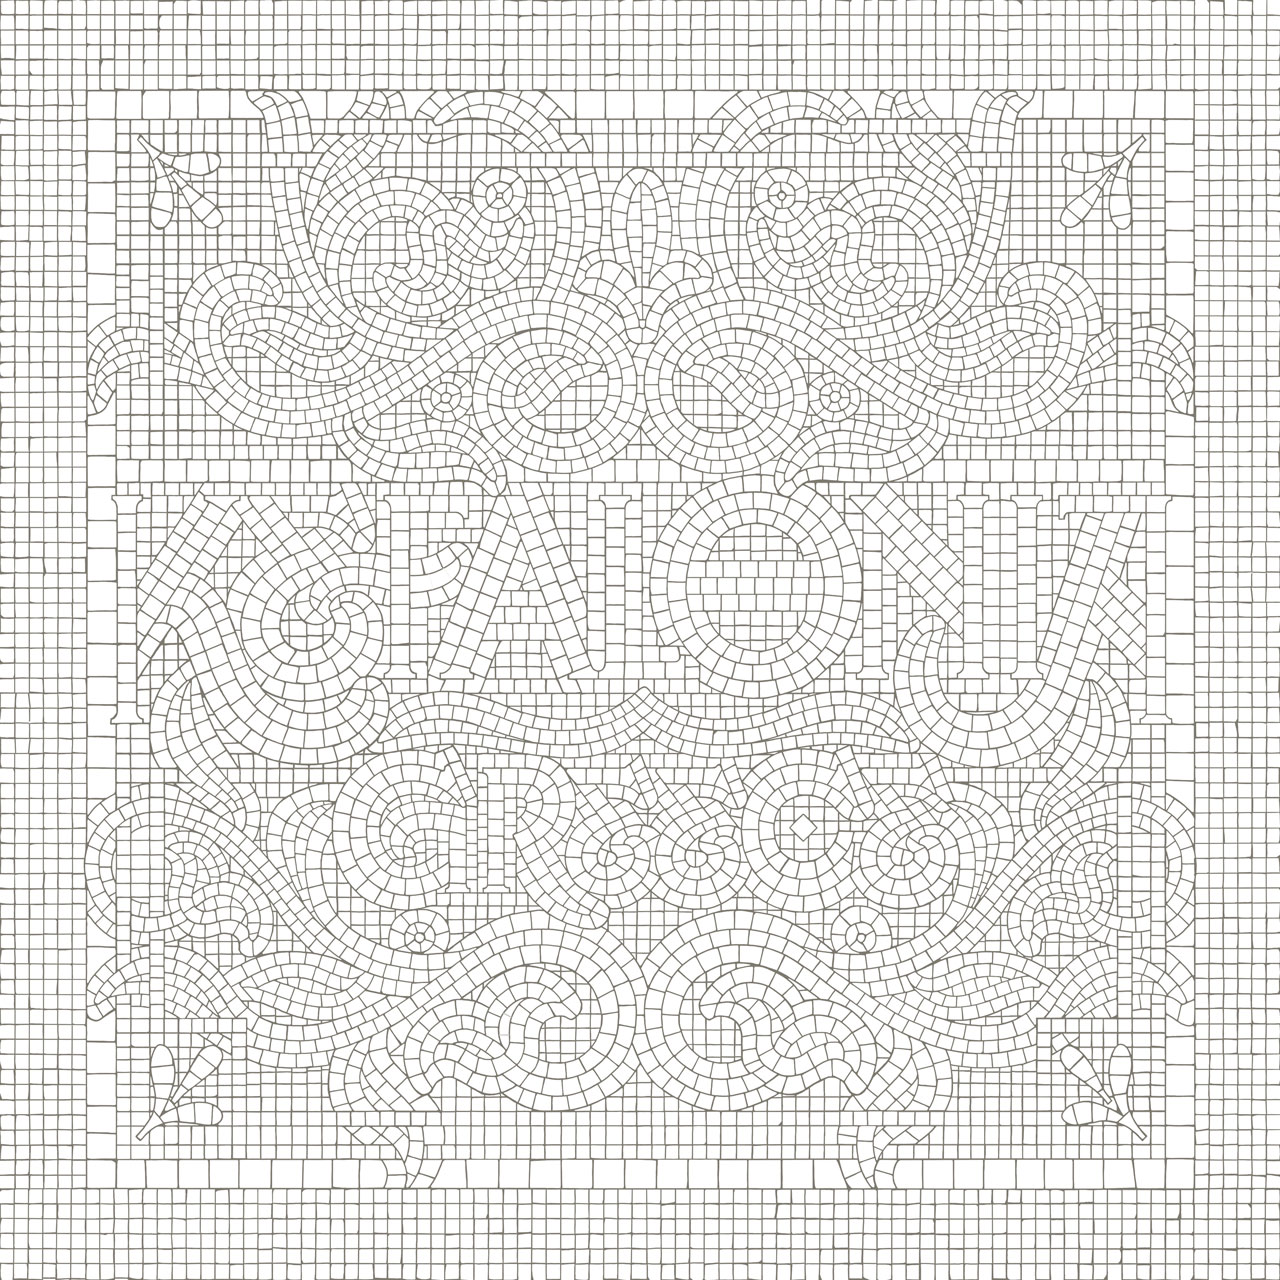 Kefalonia Lettering Fauxsaic, designed by Dan Forster